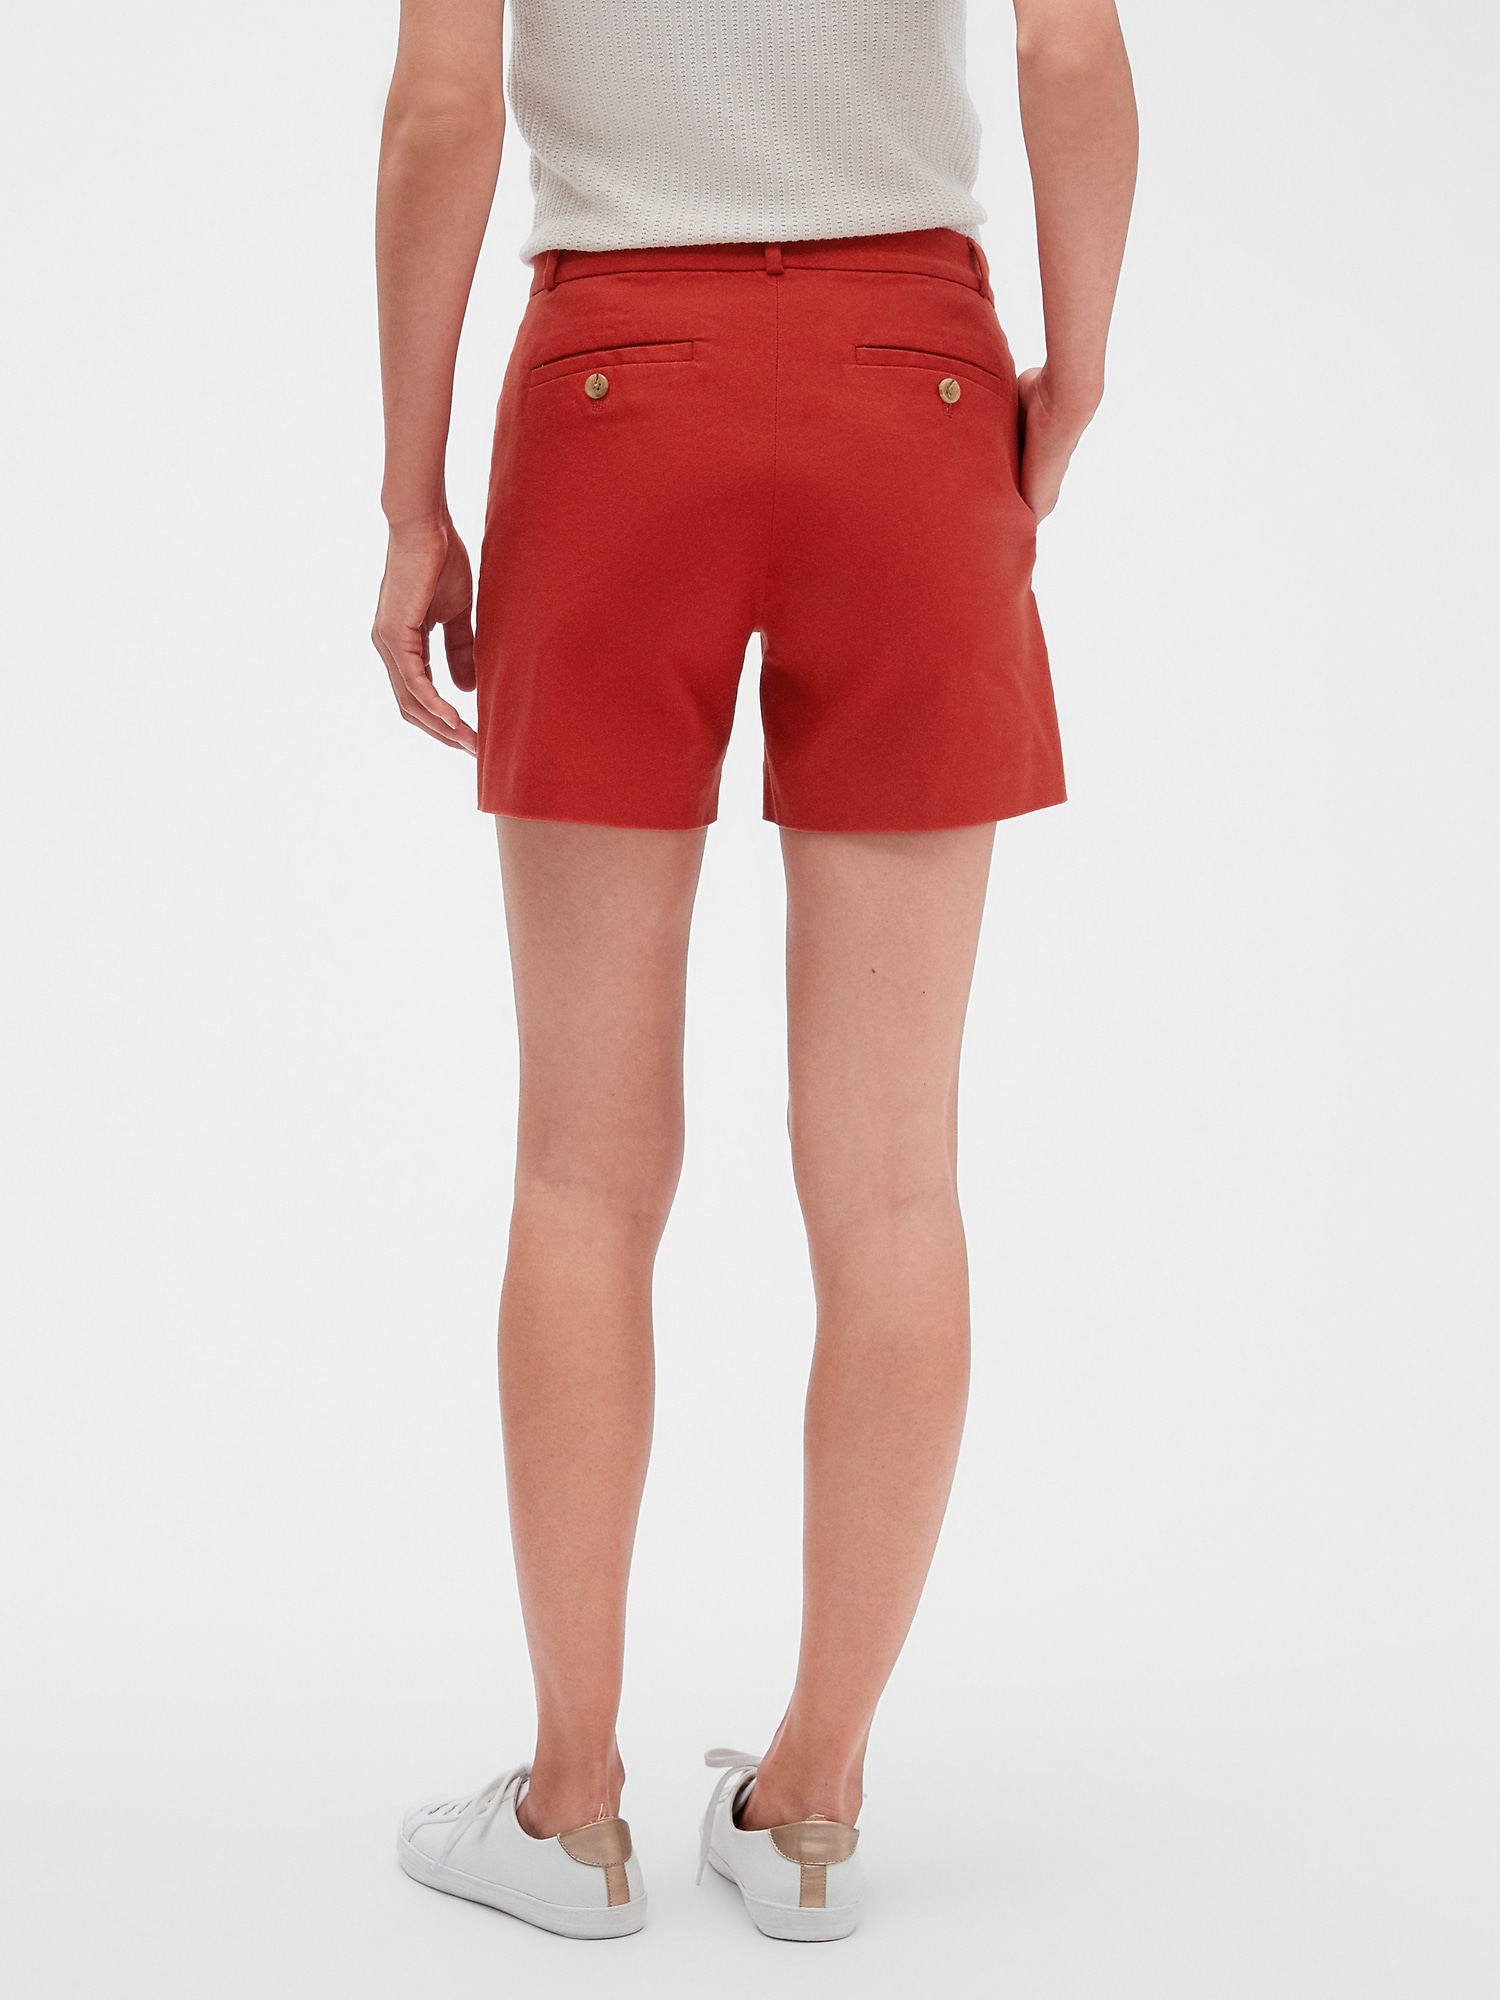 Pique Tailored Shorts - 5 inch inseam